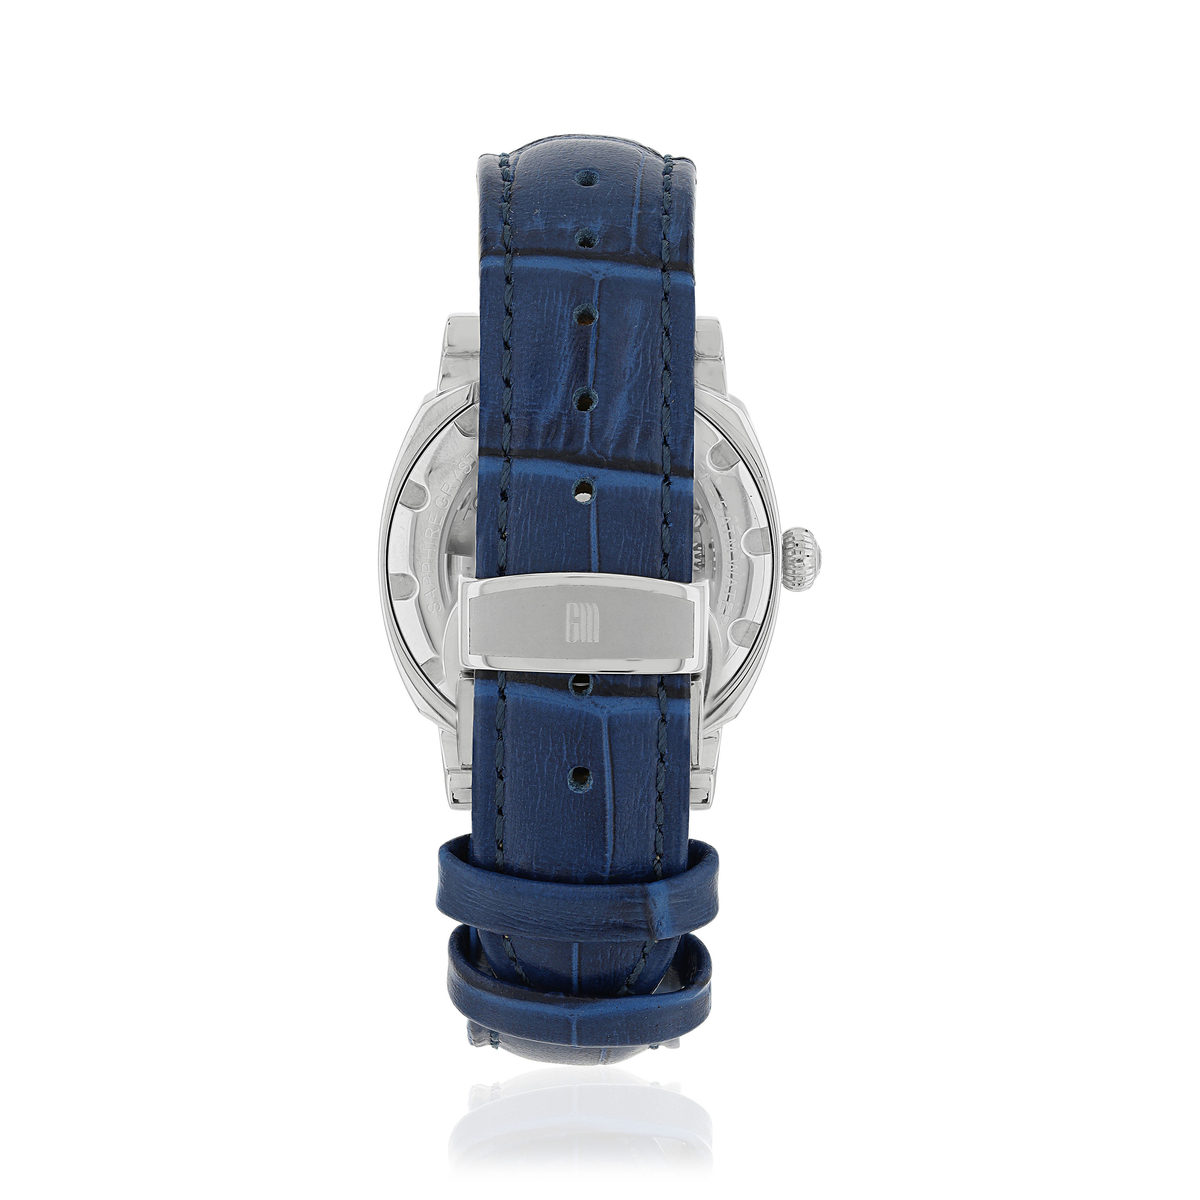 Montre MATY GM automatique cadran bleu bracelet cuir bleu - vue 3